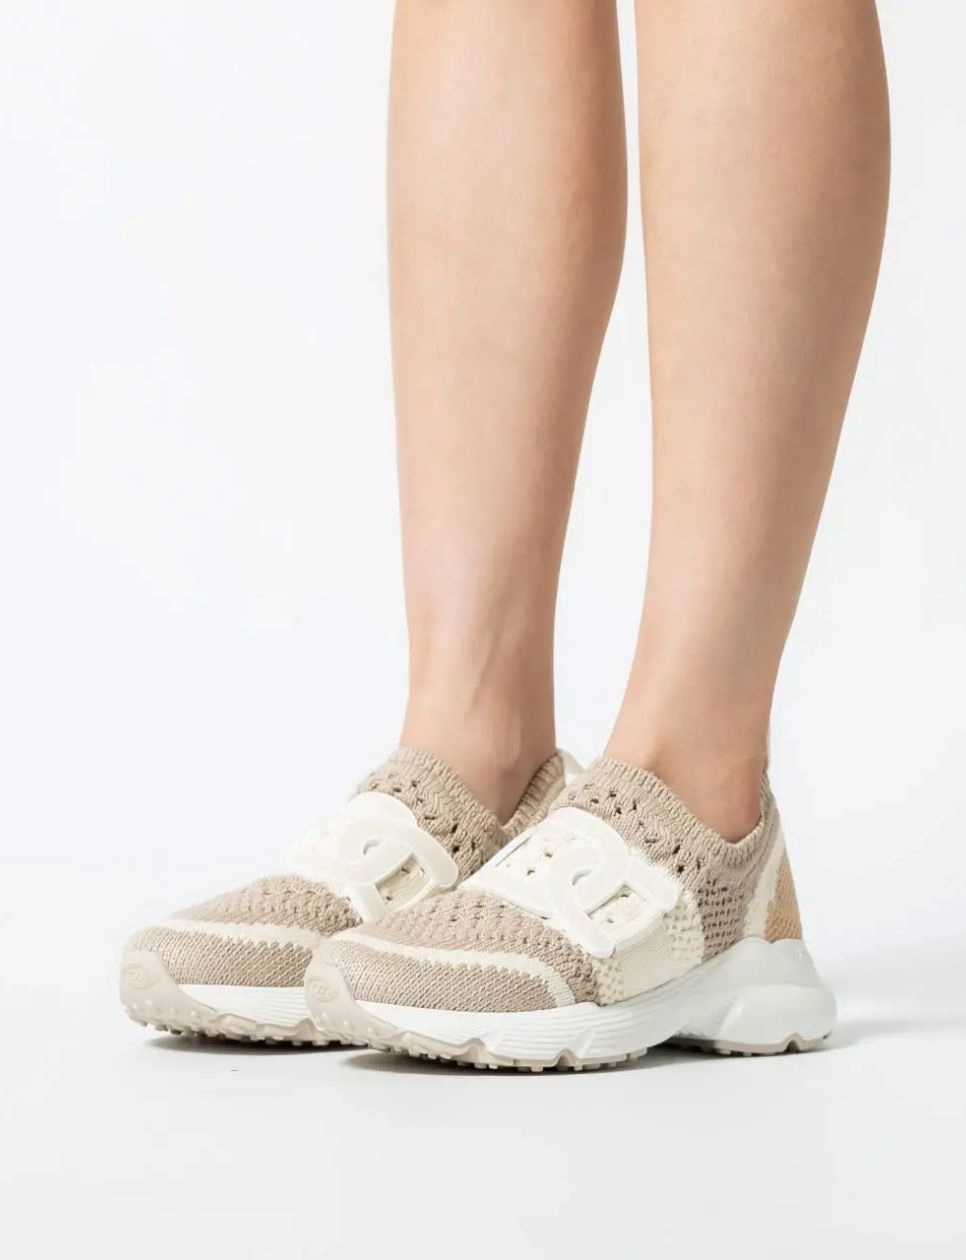 3. Tod' s Chain Leather Accessory Crochet Socks Slip-On Sneakers Beige Off White